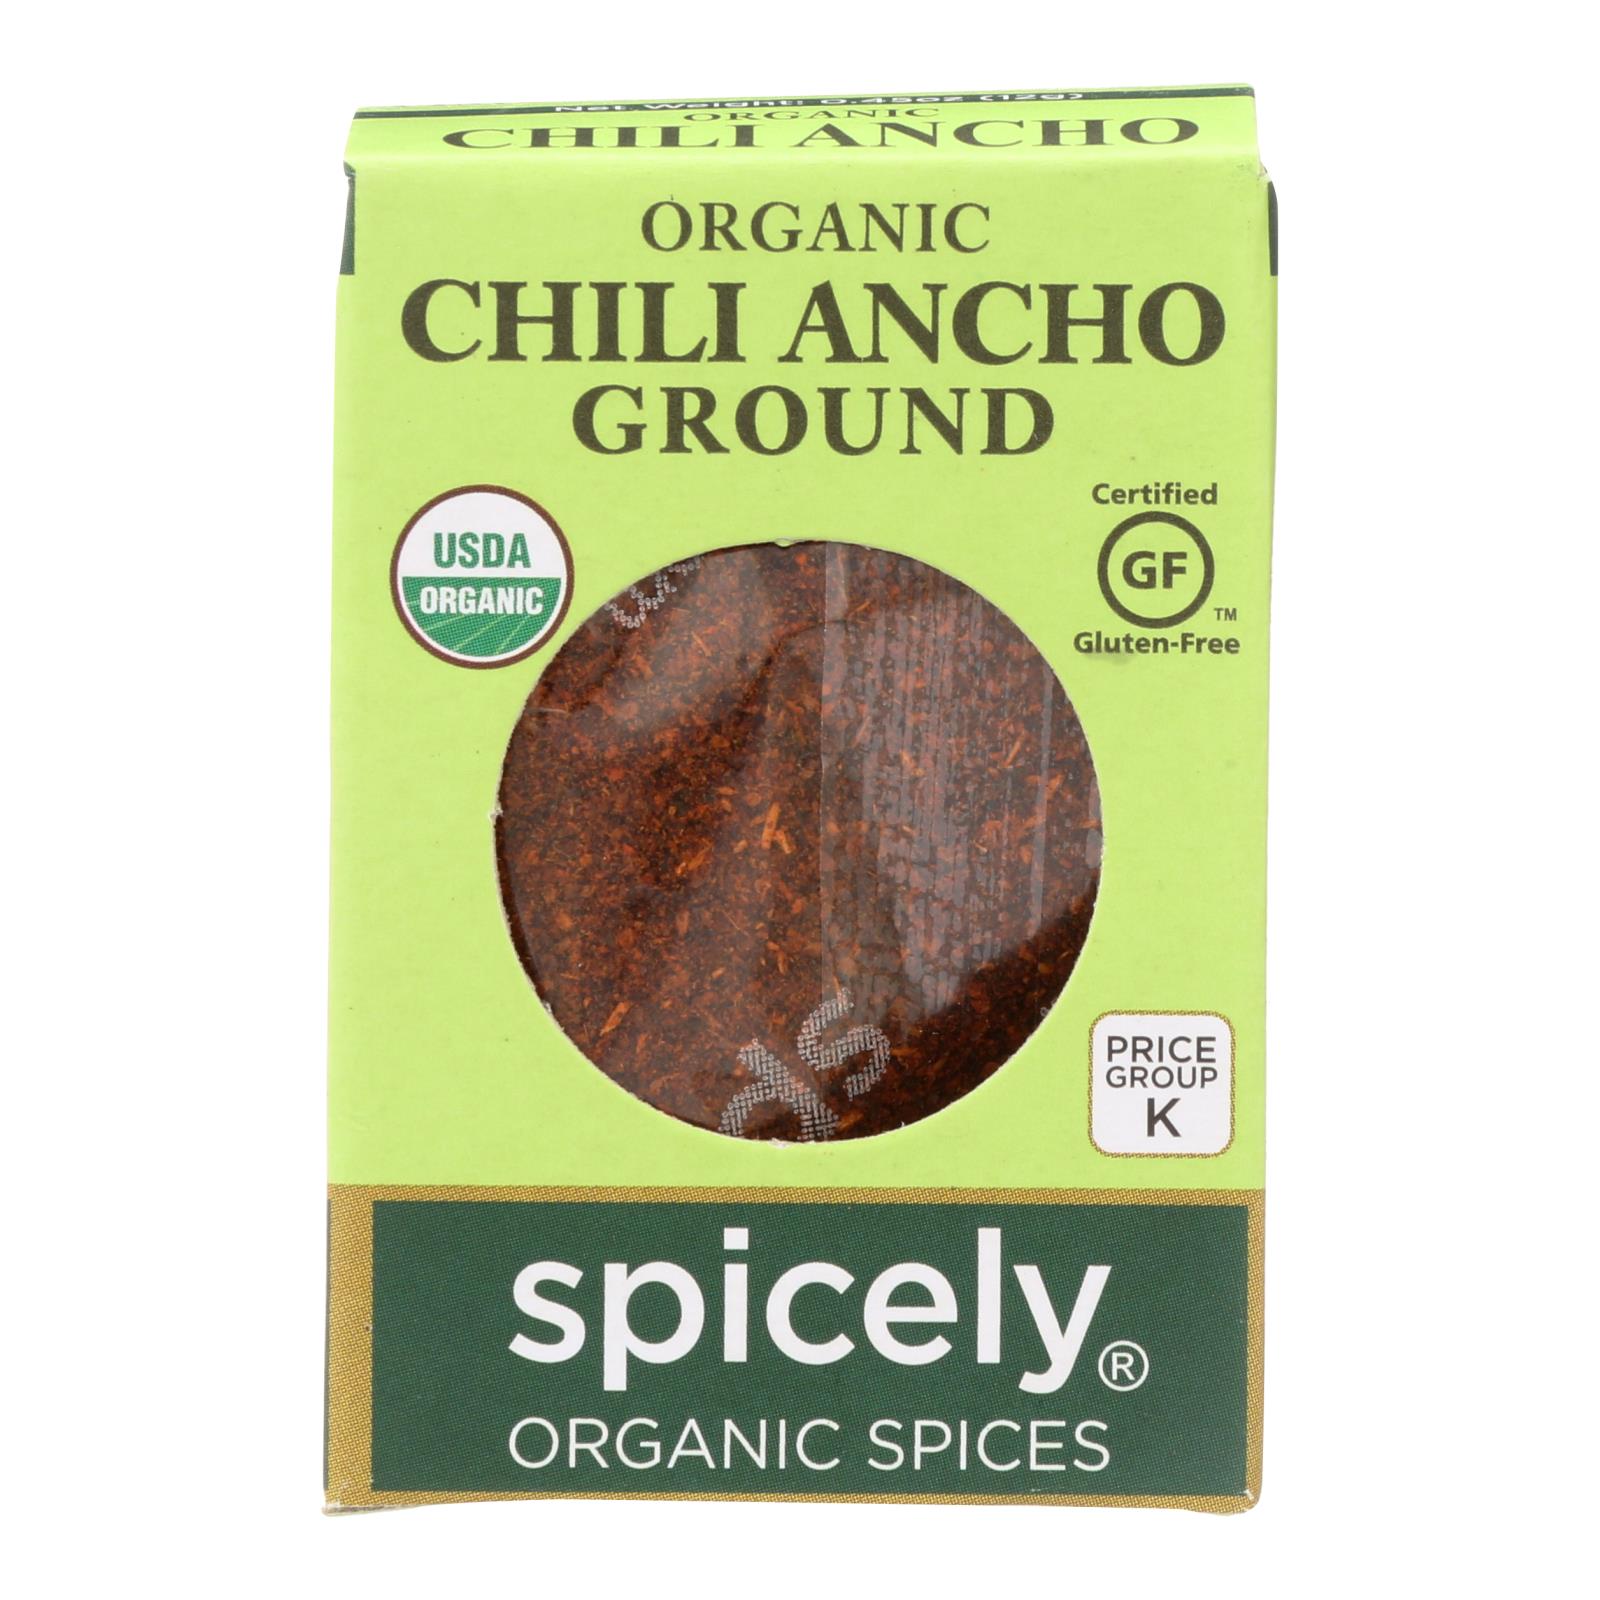 Spicely Organics - Organic Ancho Chili - Ground - 6개 묶음상품 - 0.45 oz.